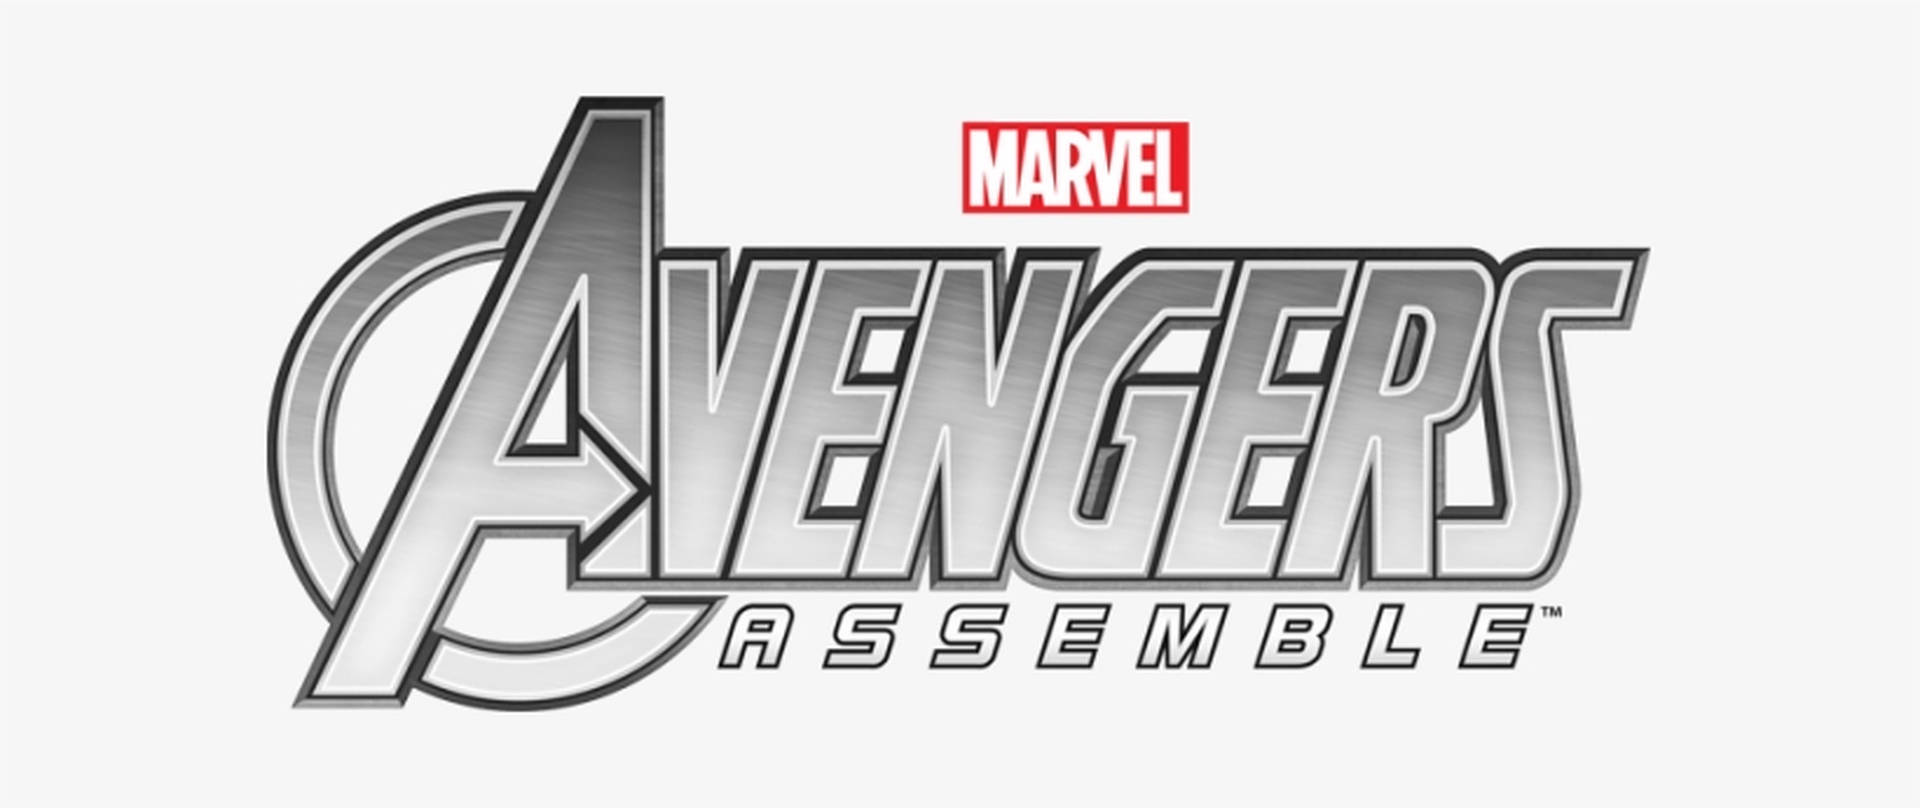 Avengersversammeln Sich In Silberner Ausführung Auf Dem Logo. Wallpaper